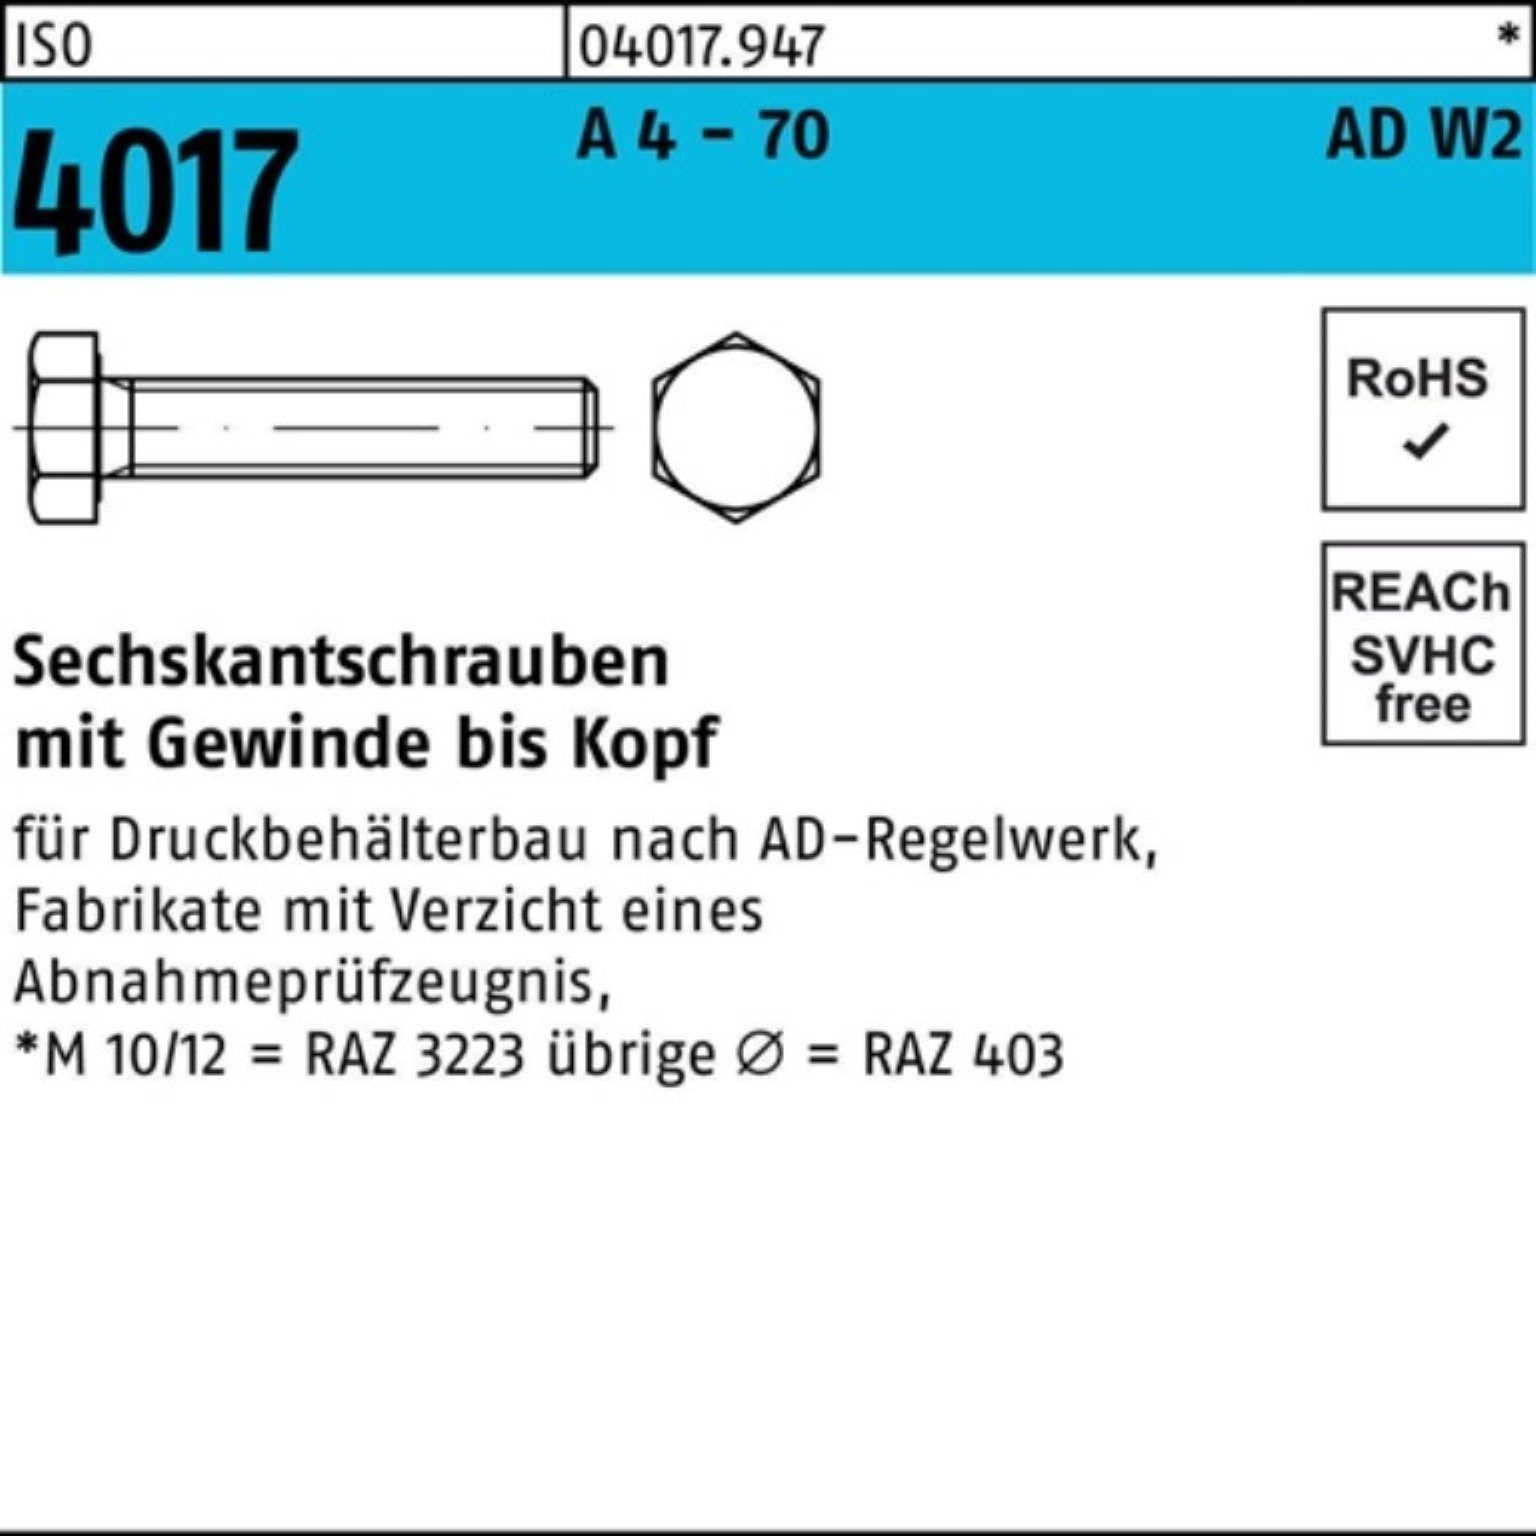 Bufab Sechskantschraube 100er Pack Sechskantschraube 4017 70 ISO AD-W2 25 M16x St 4 65 - VG A